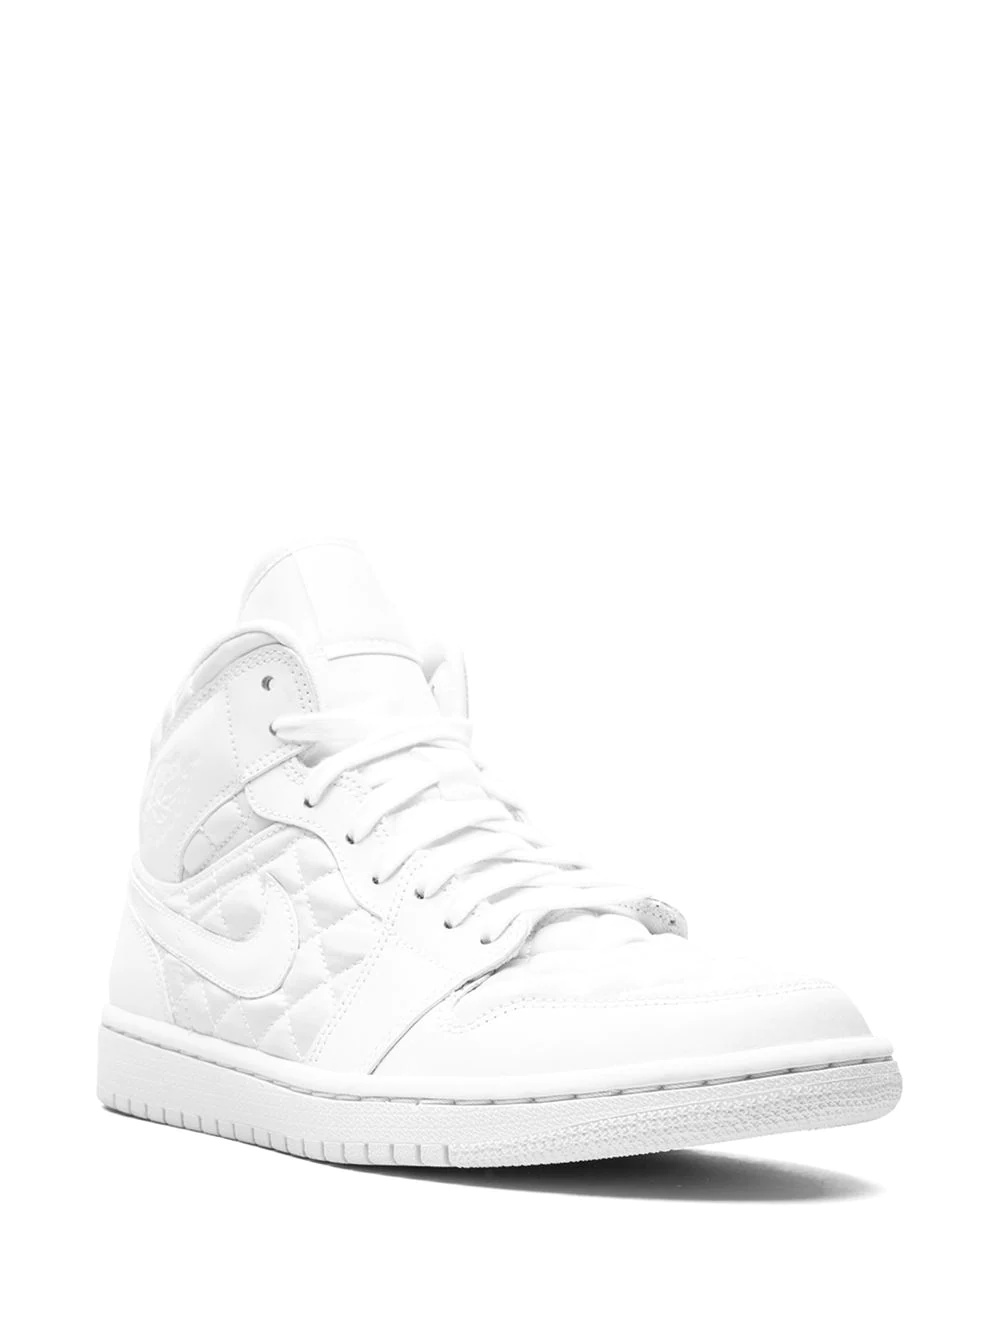 Air Jordan 1 Mid "Quilted White" sneakers - 2